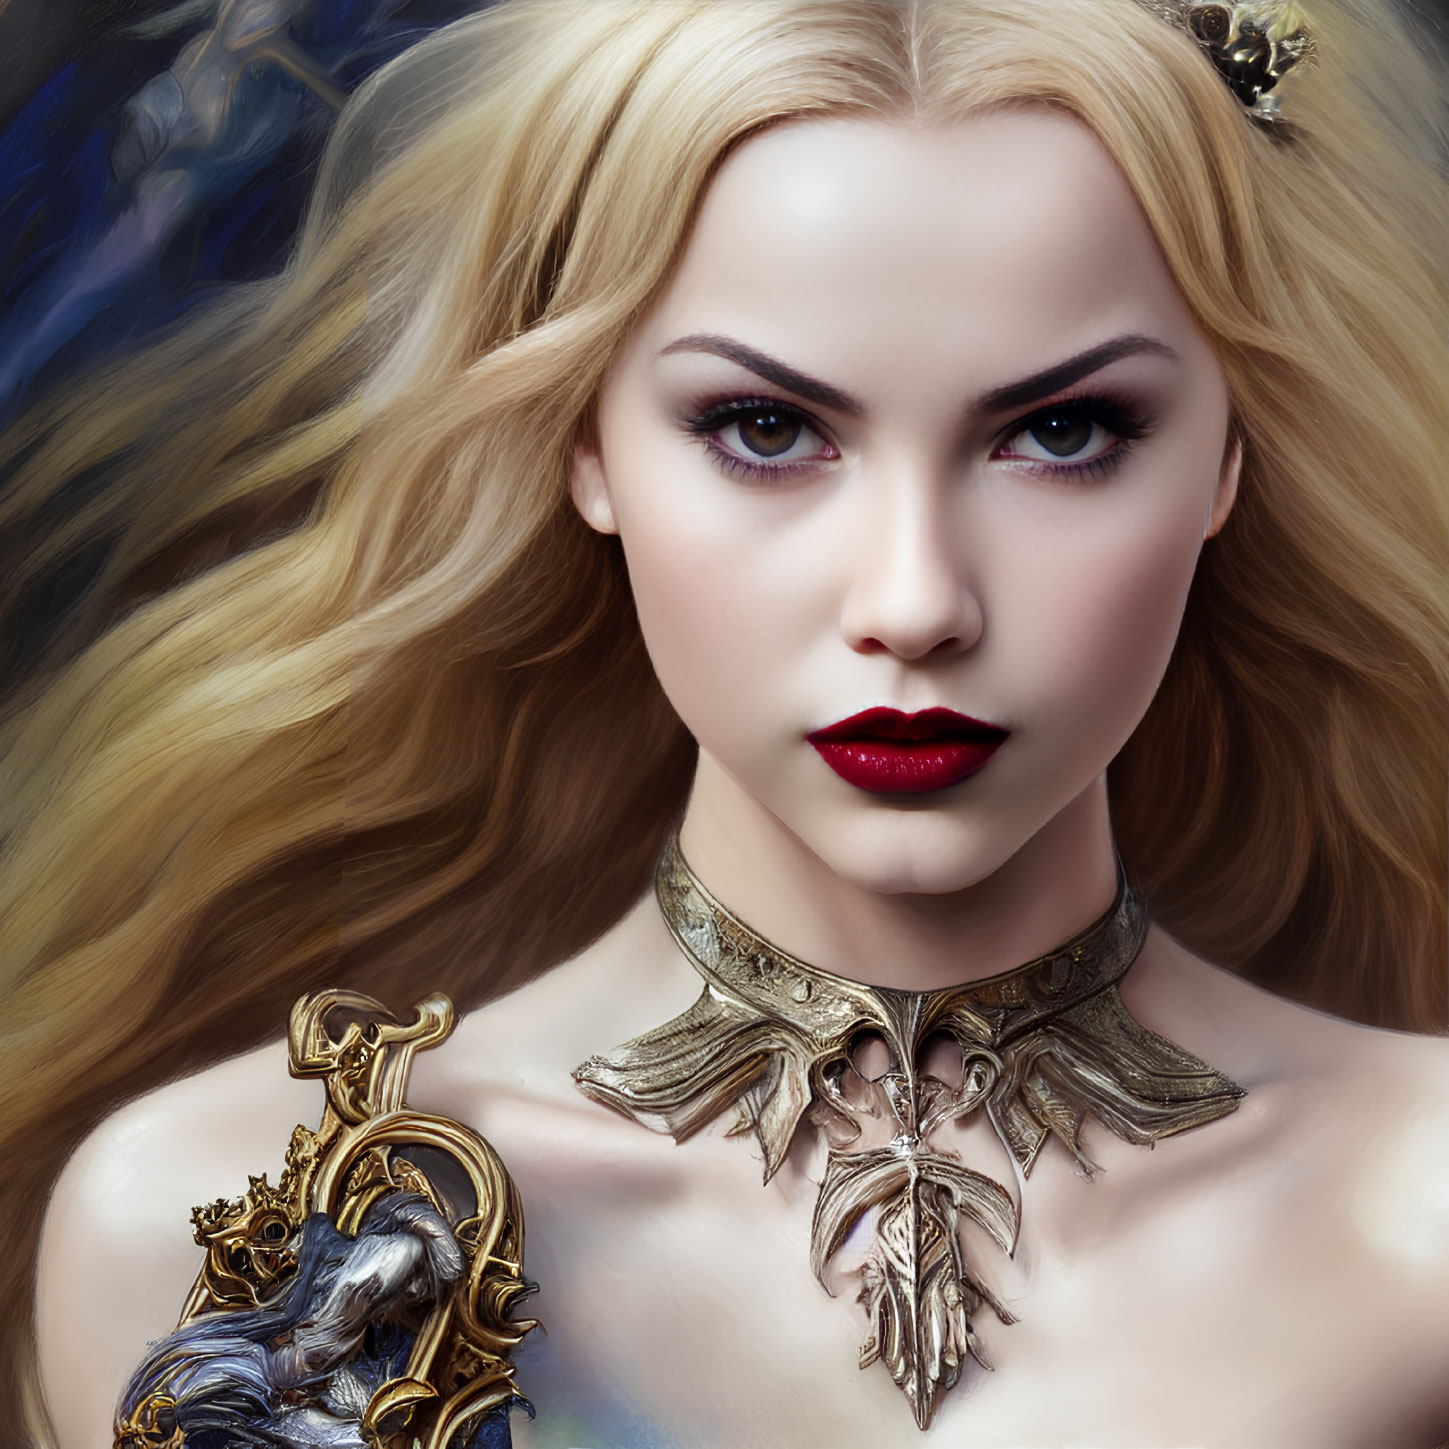 Digital Artwork: Woman with Golden Hair, Red Lips, and Lion Emblem Choker